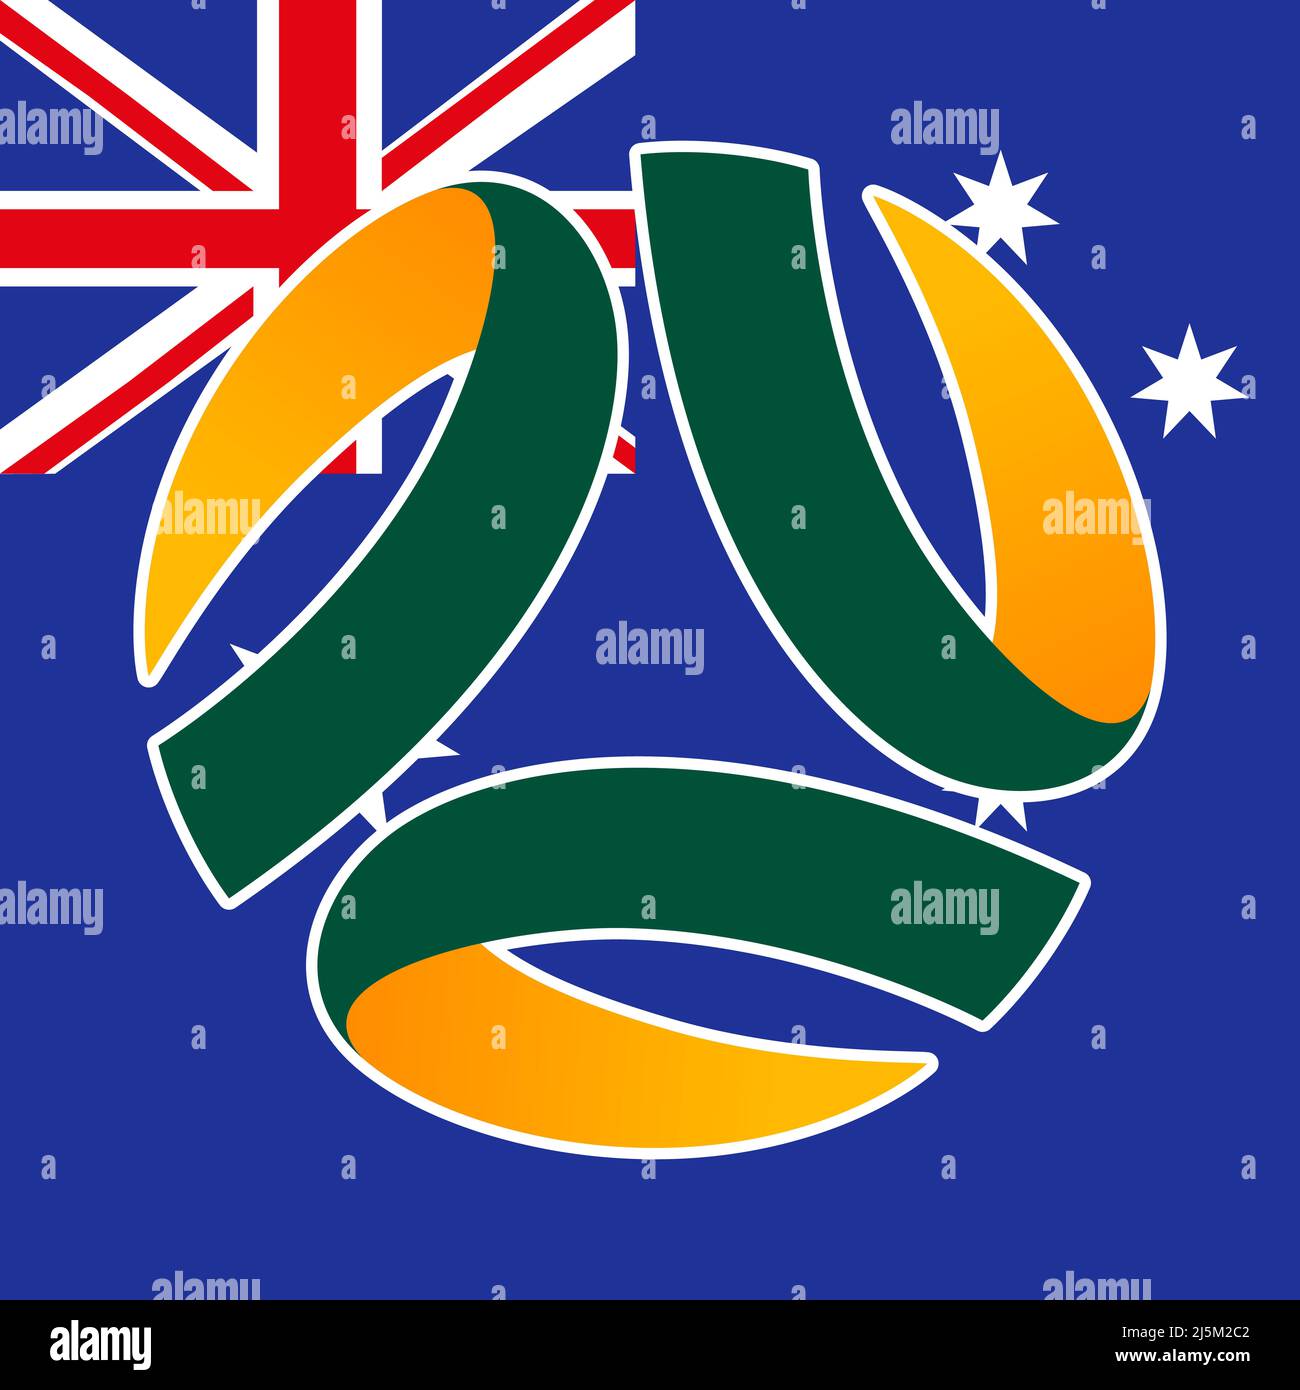 Australia football federation logo with national flag, FIFA World Cup 2022, illustration Stock Photo